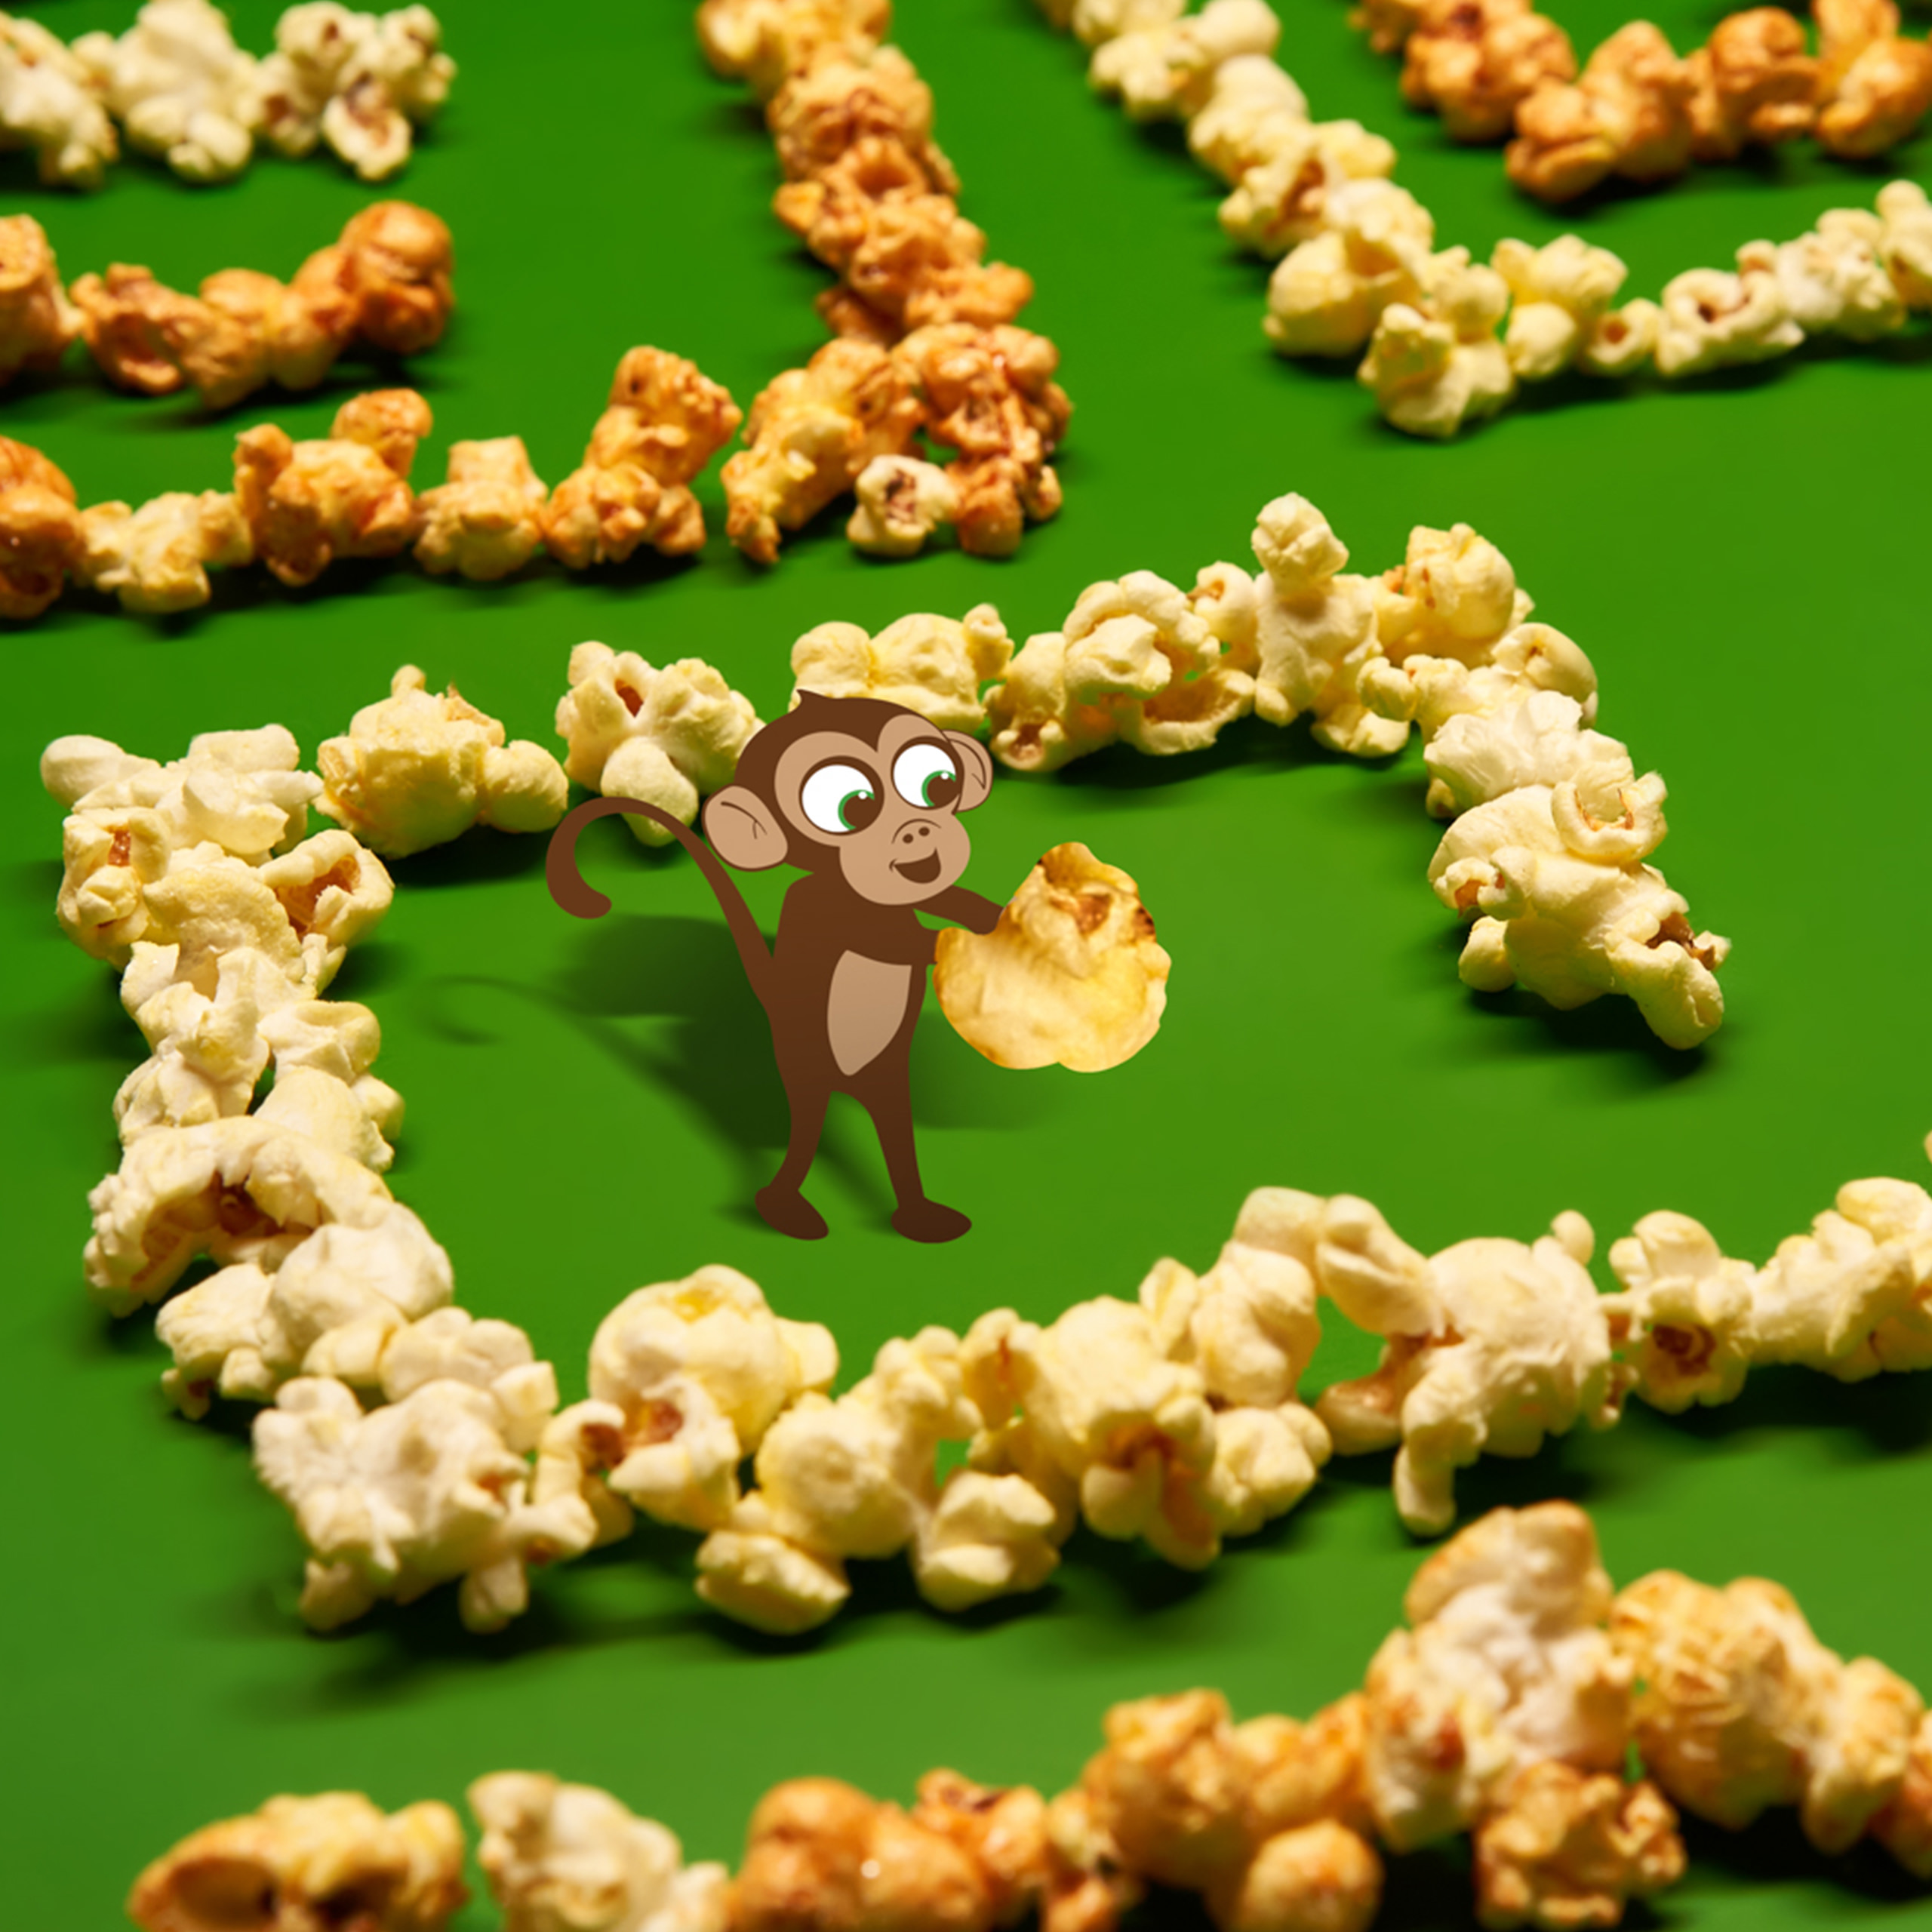 Popcorn Photoshoot for Social Media Content